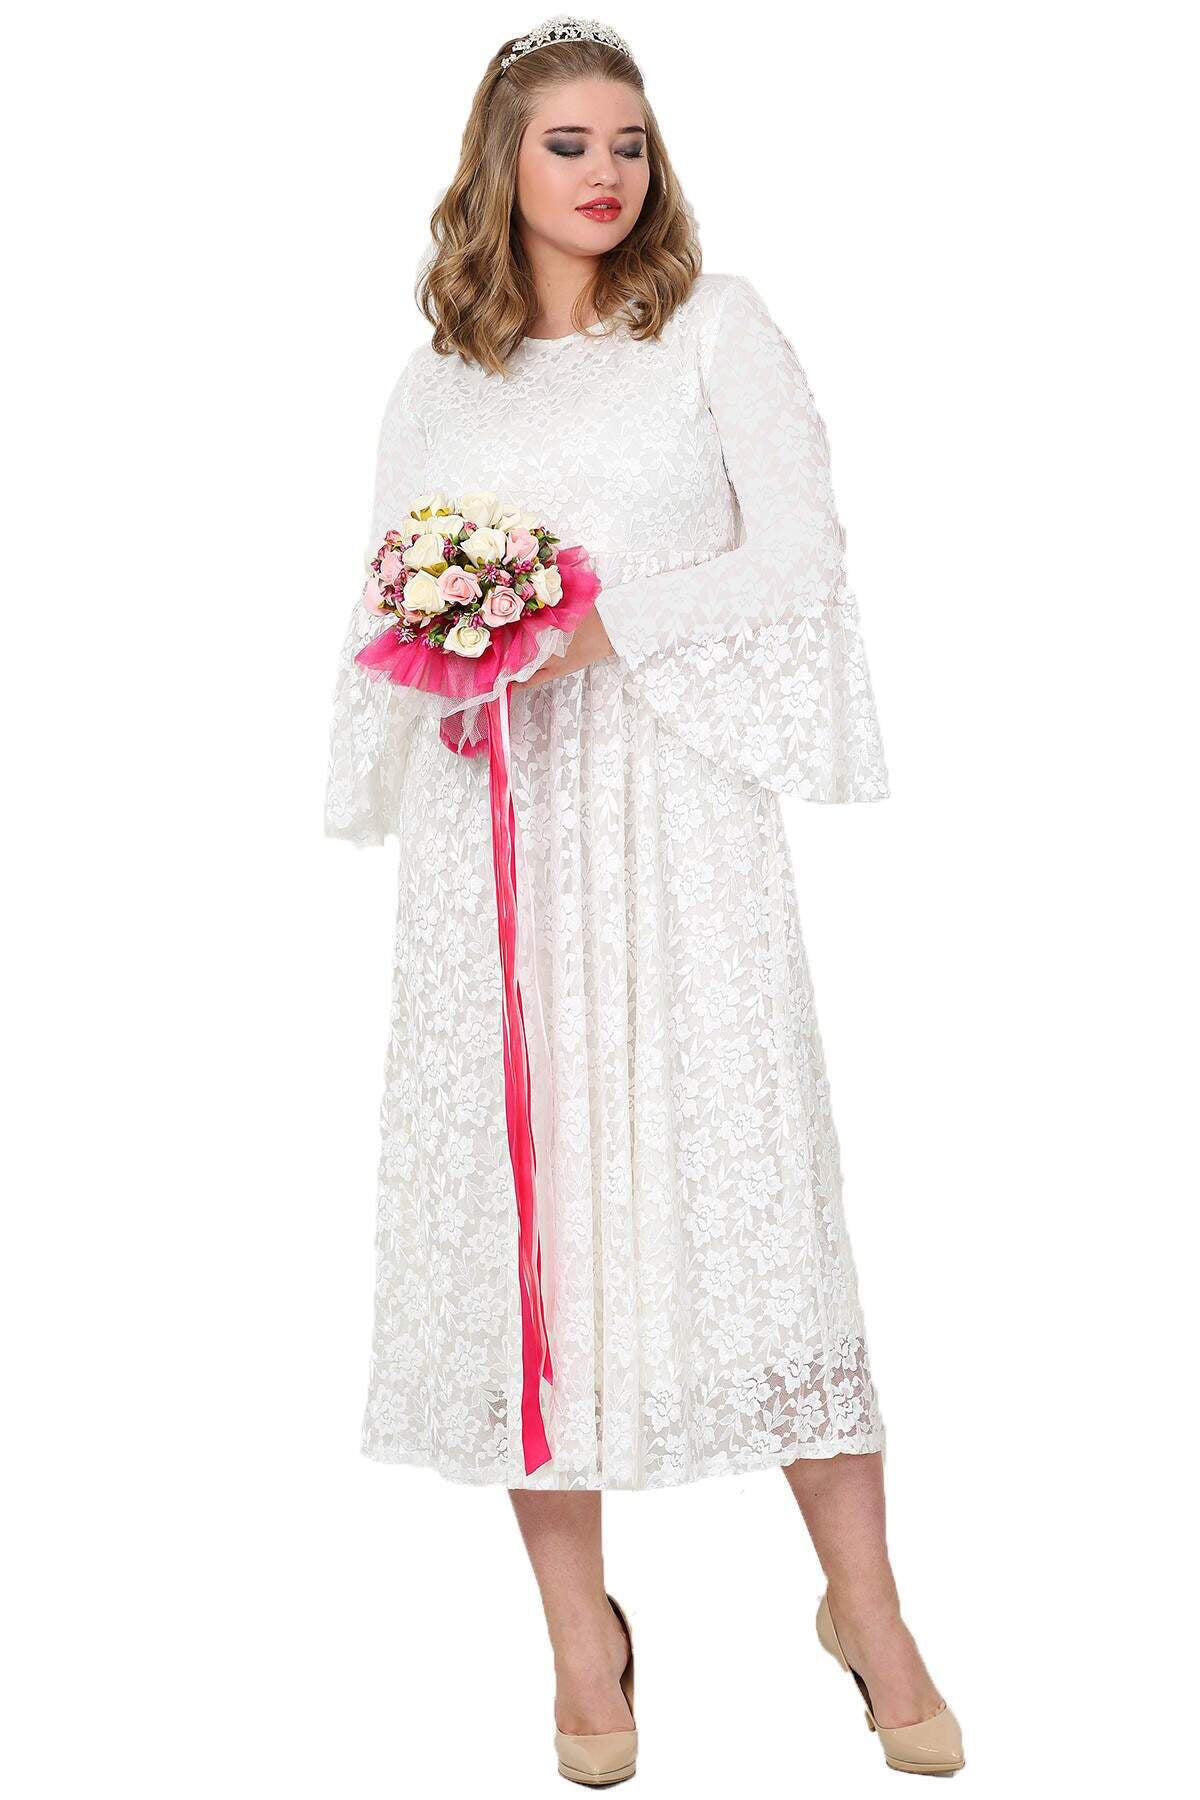 Women's Oversize White Lace Modest Dress